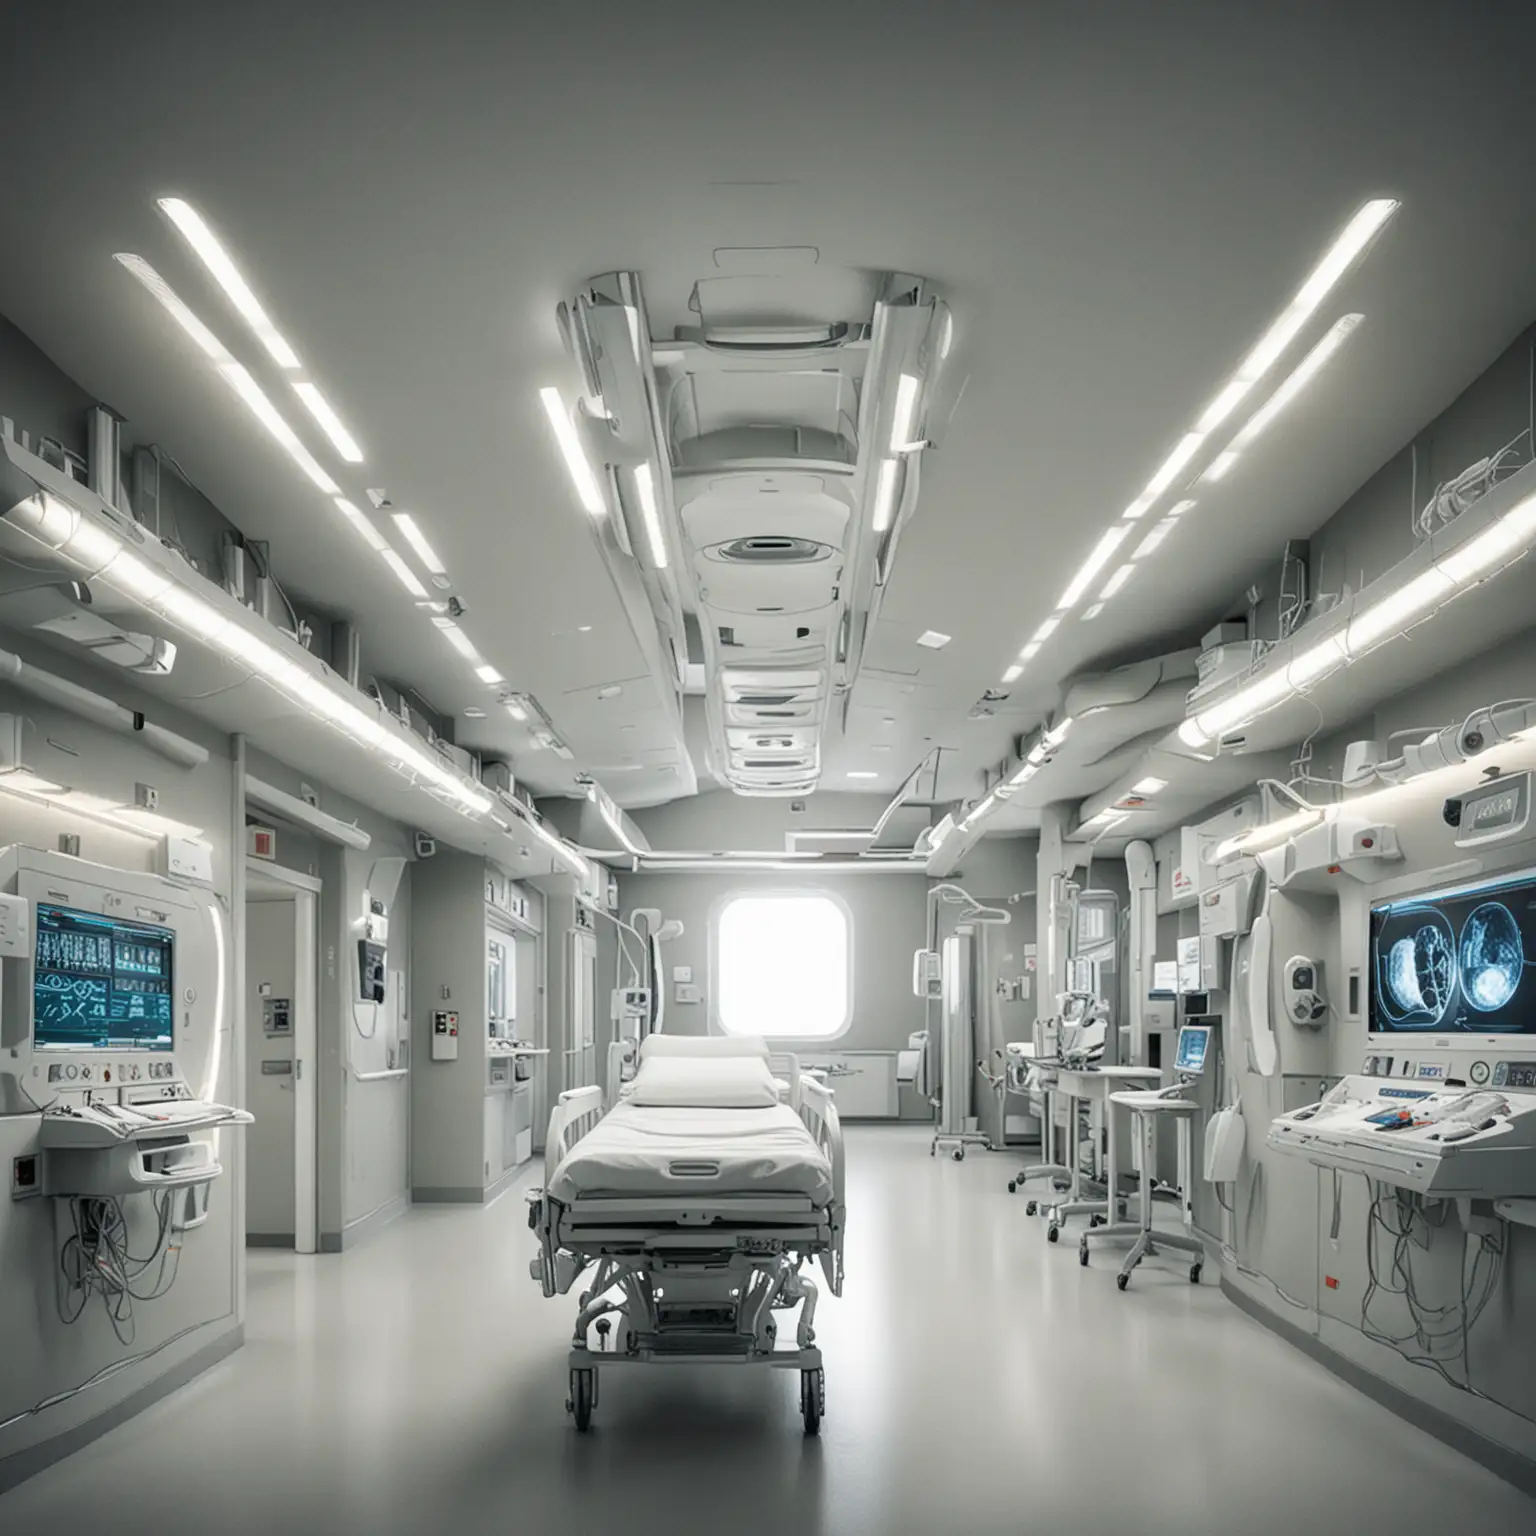 Futuristic Hospital with Advanced Medical Technology